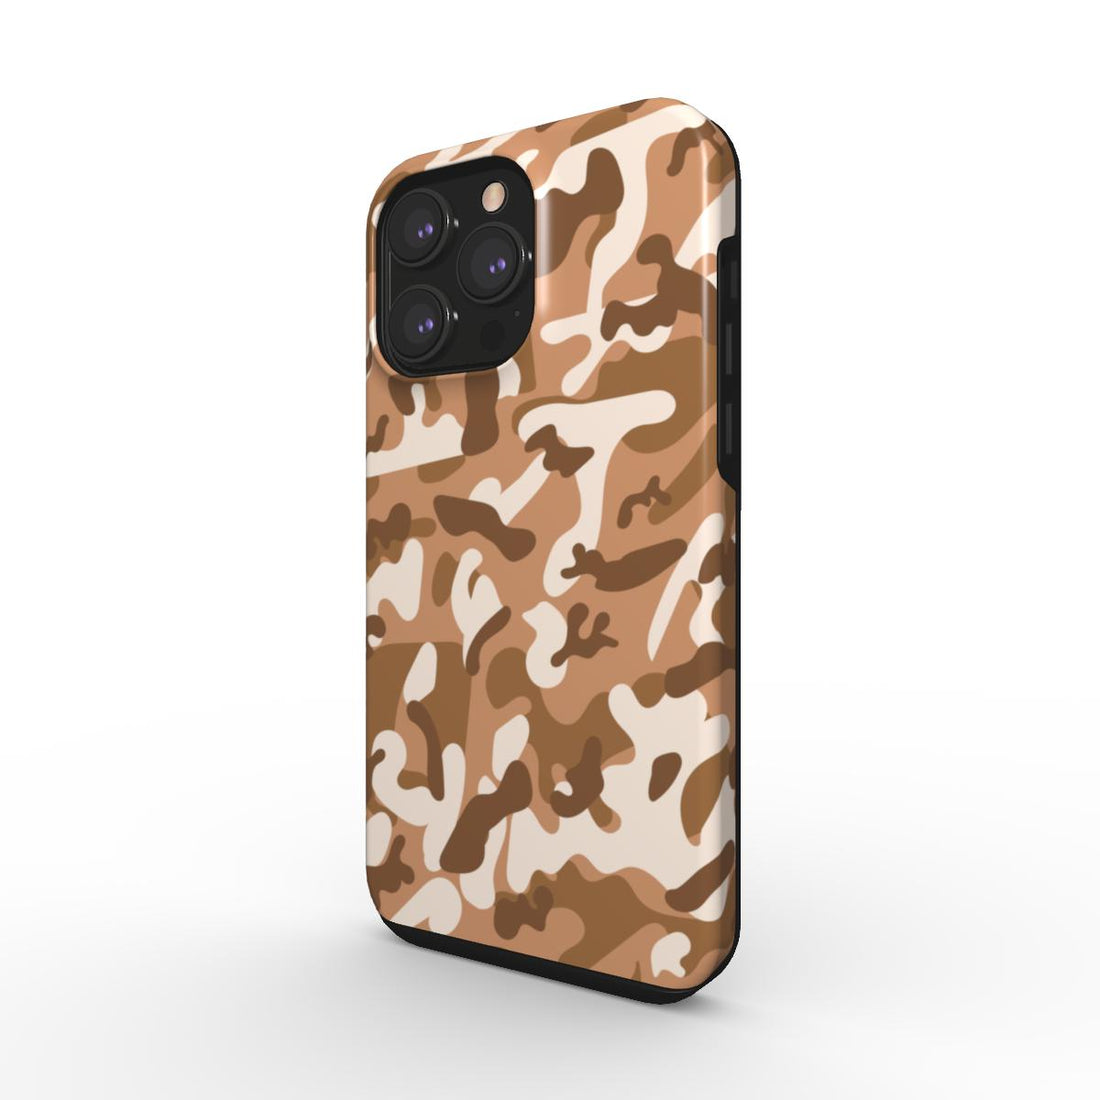 Woestijn camouflage telefoonhoesje | Stevig telefoonhoesje